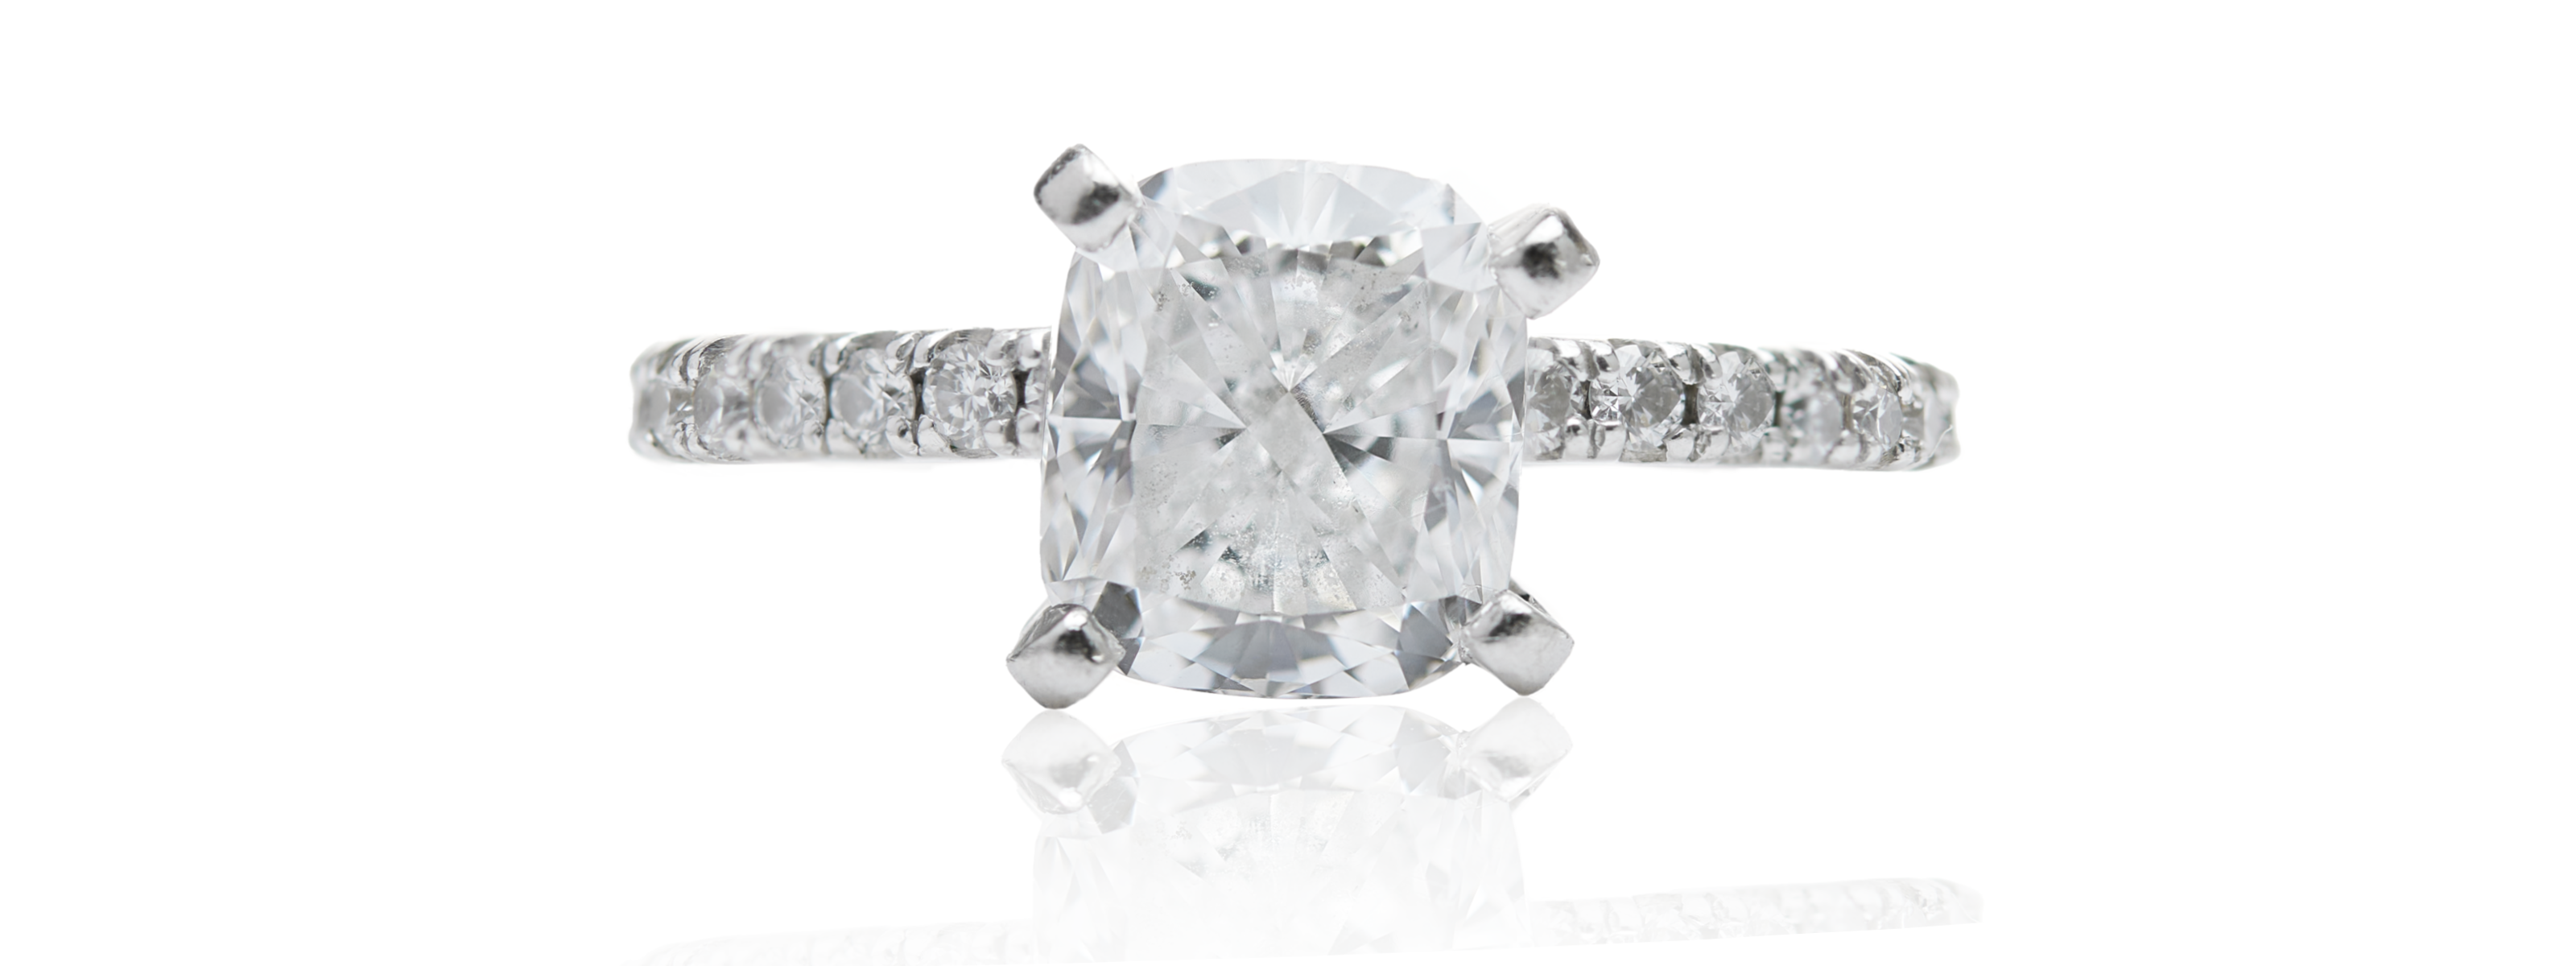 Flitz Diamond and Gemstone Cleaner – Fine Jewelry Cleaner for All Jewelry, Gold, Diamond Rings, Sterling Silver, Platinum and More - 7 oz Dip Jar